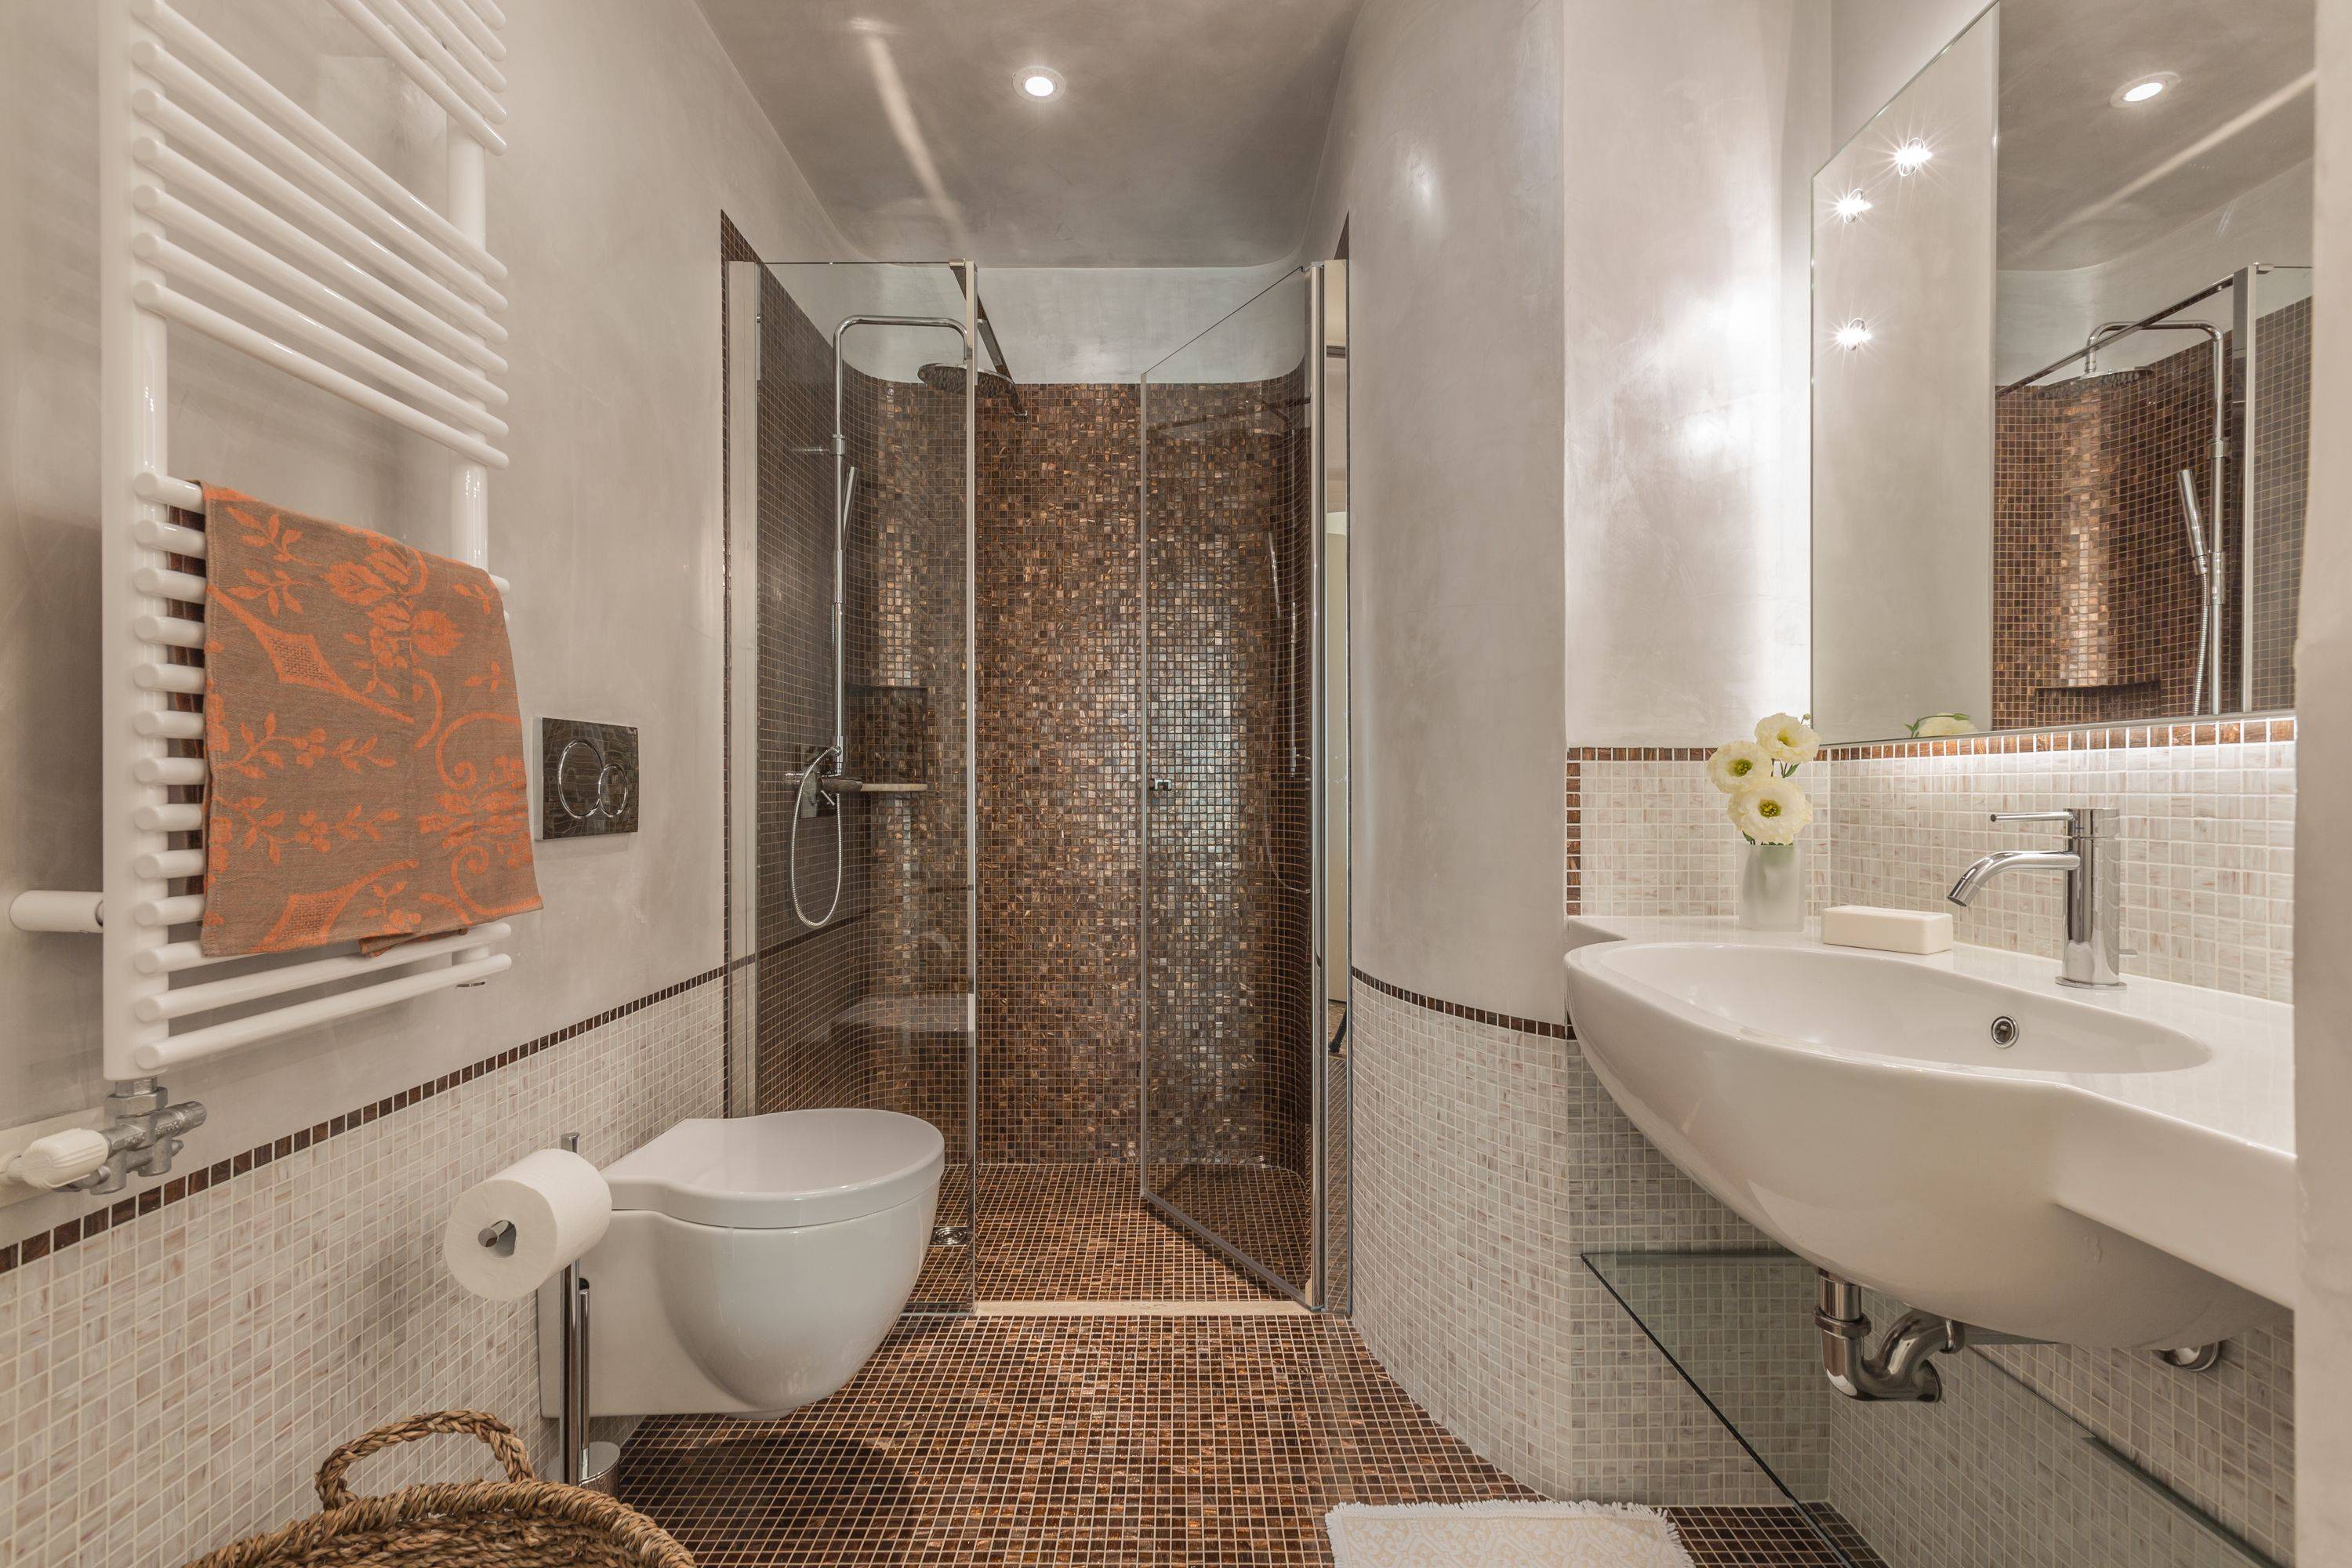 the en-suite bathroom of the main bedroom with precious mosaic tiles